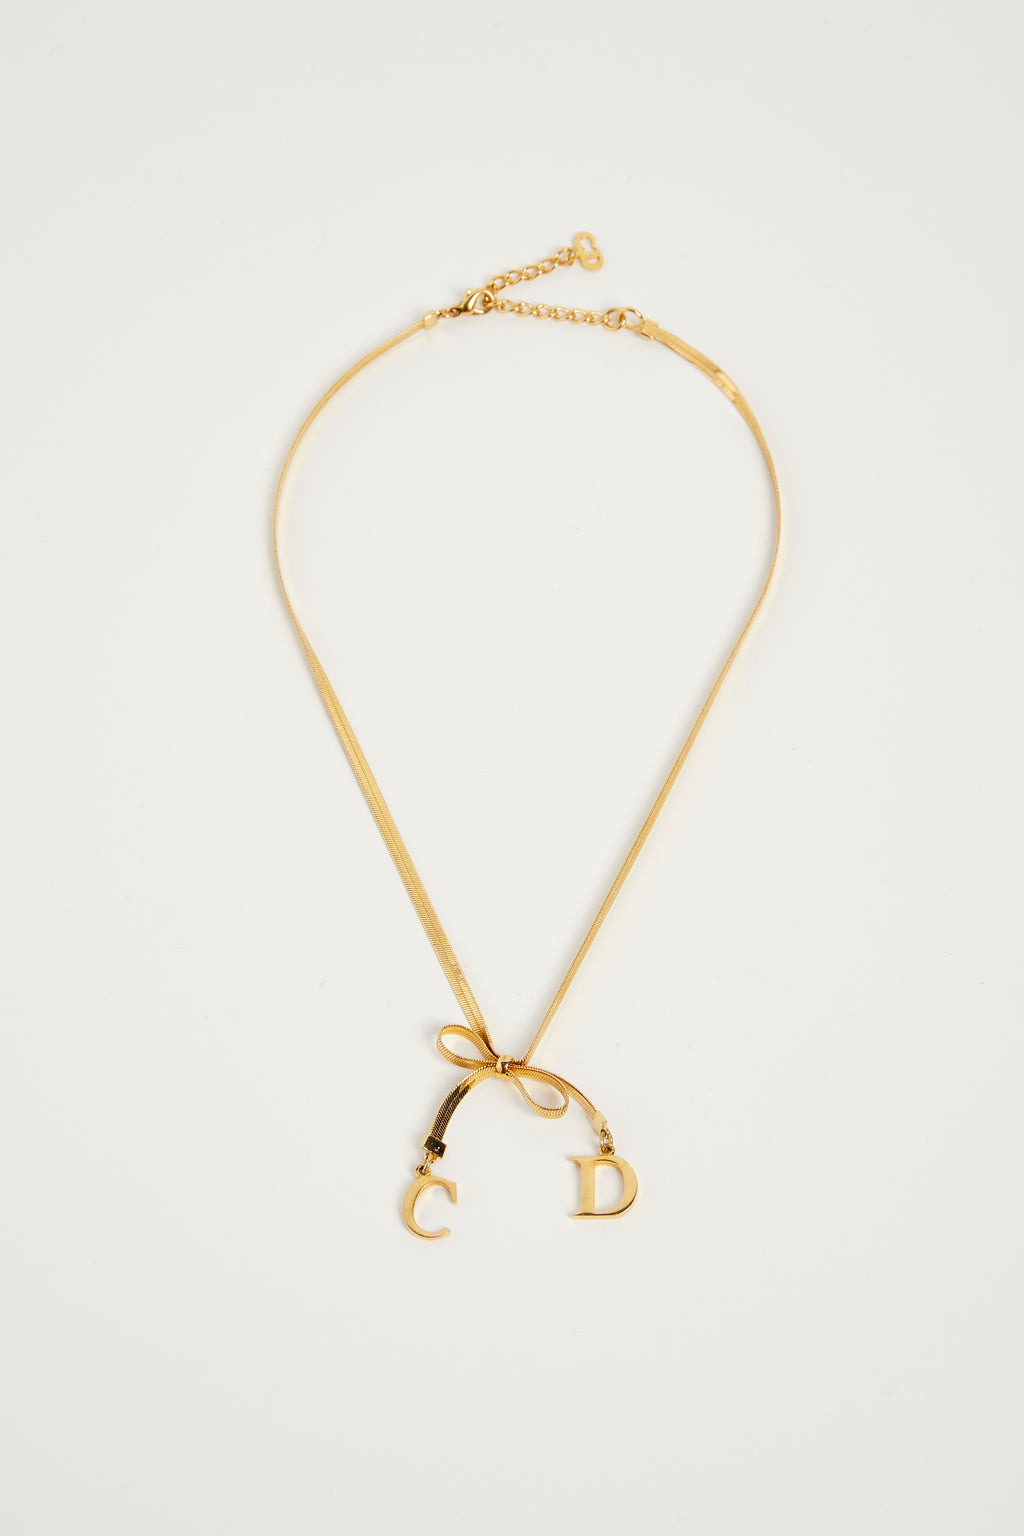 RARE Christian Dior Gold Bow Necklace